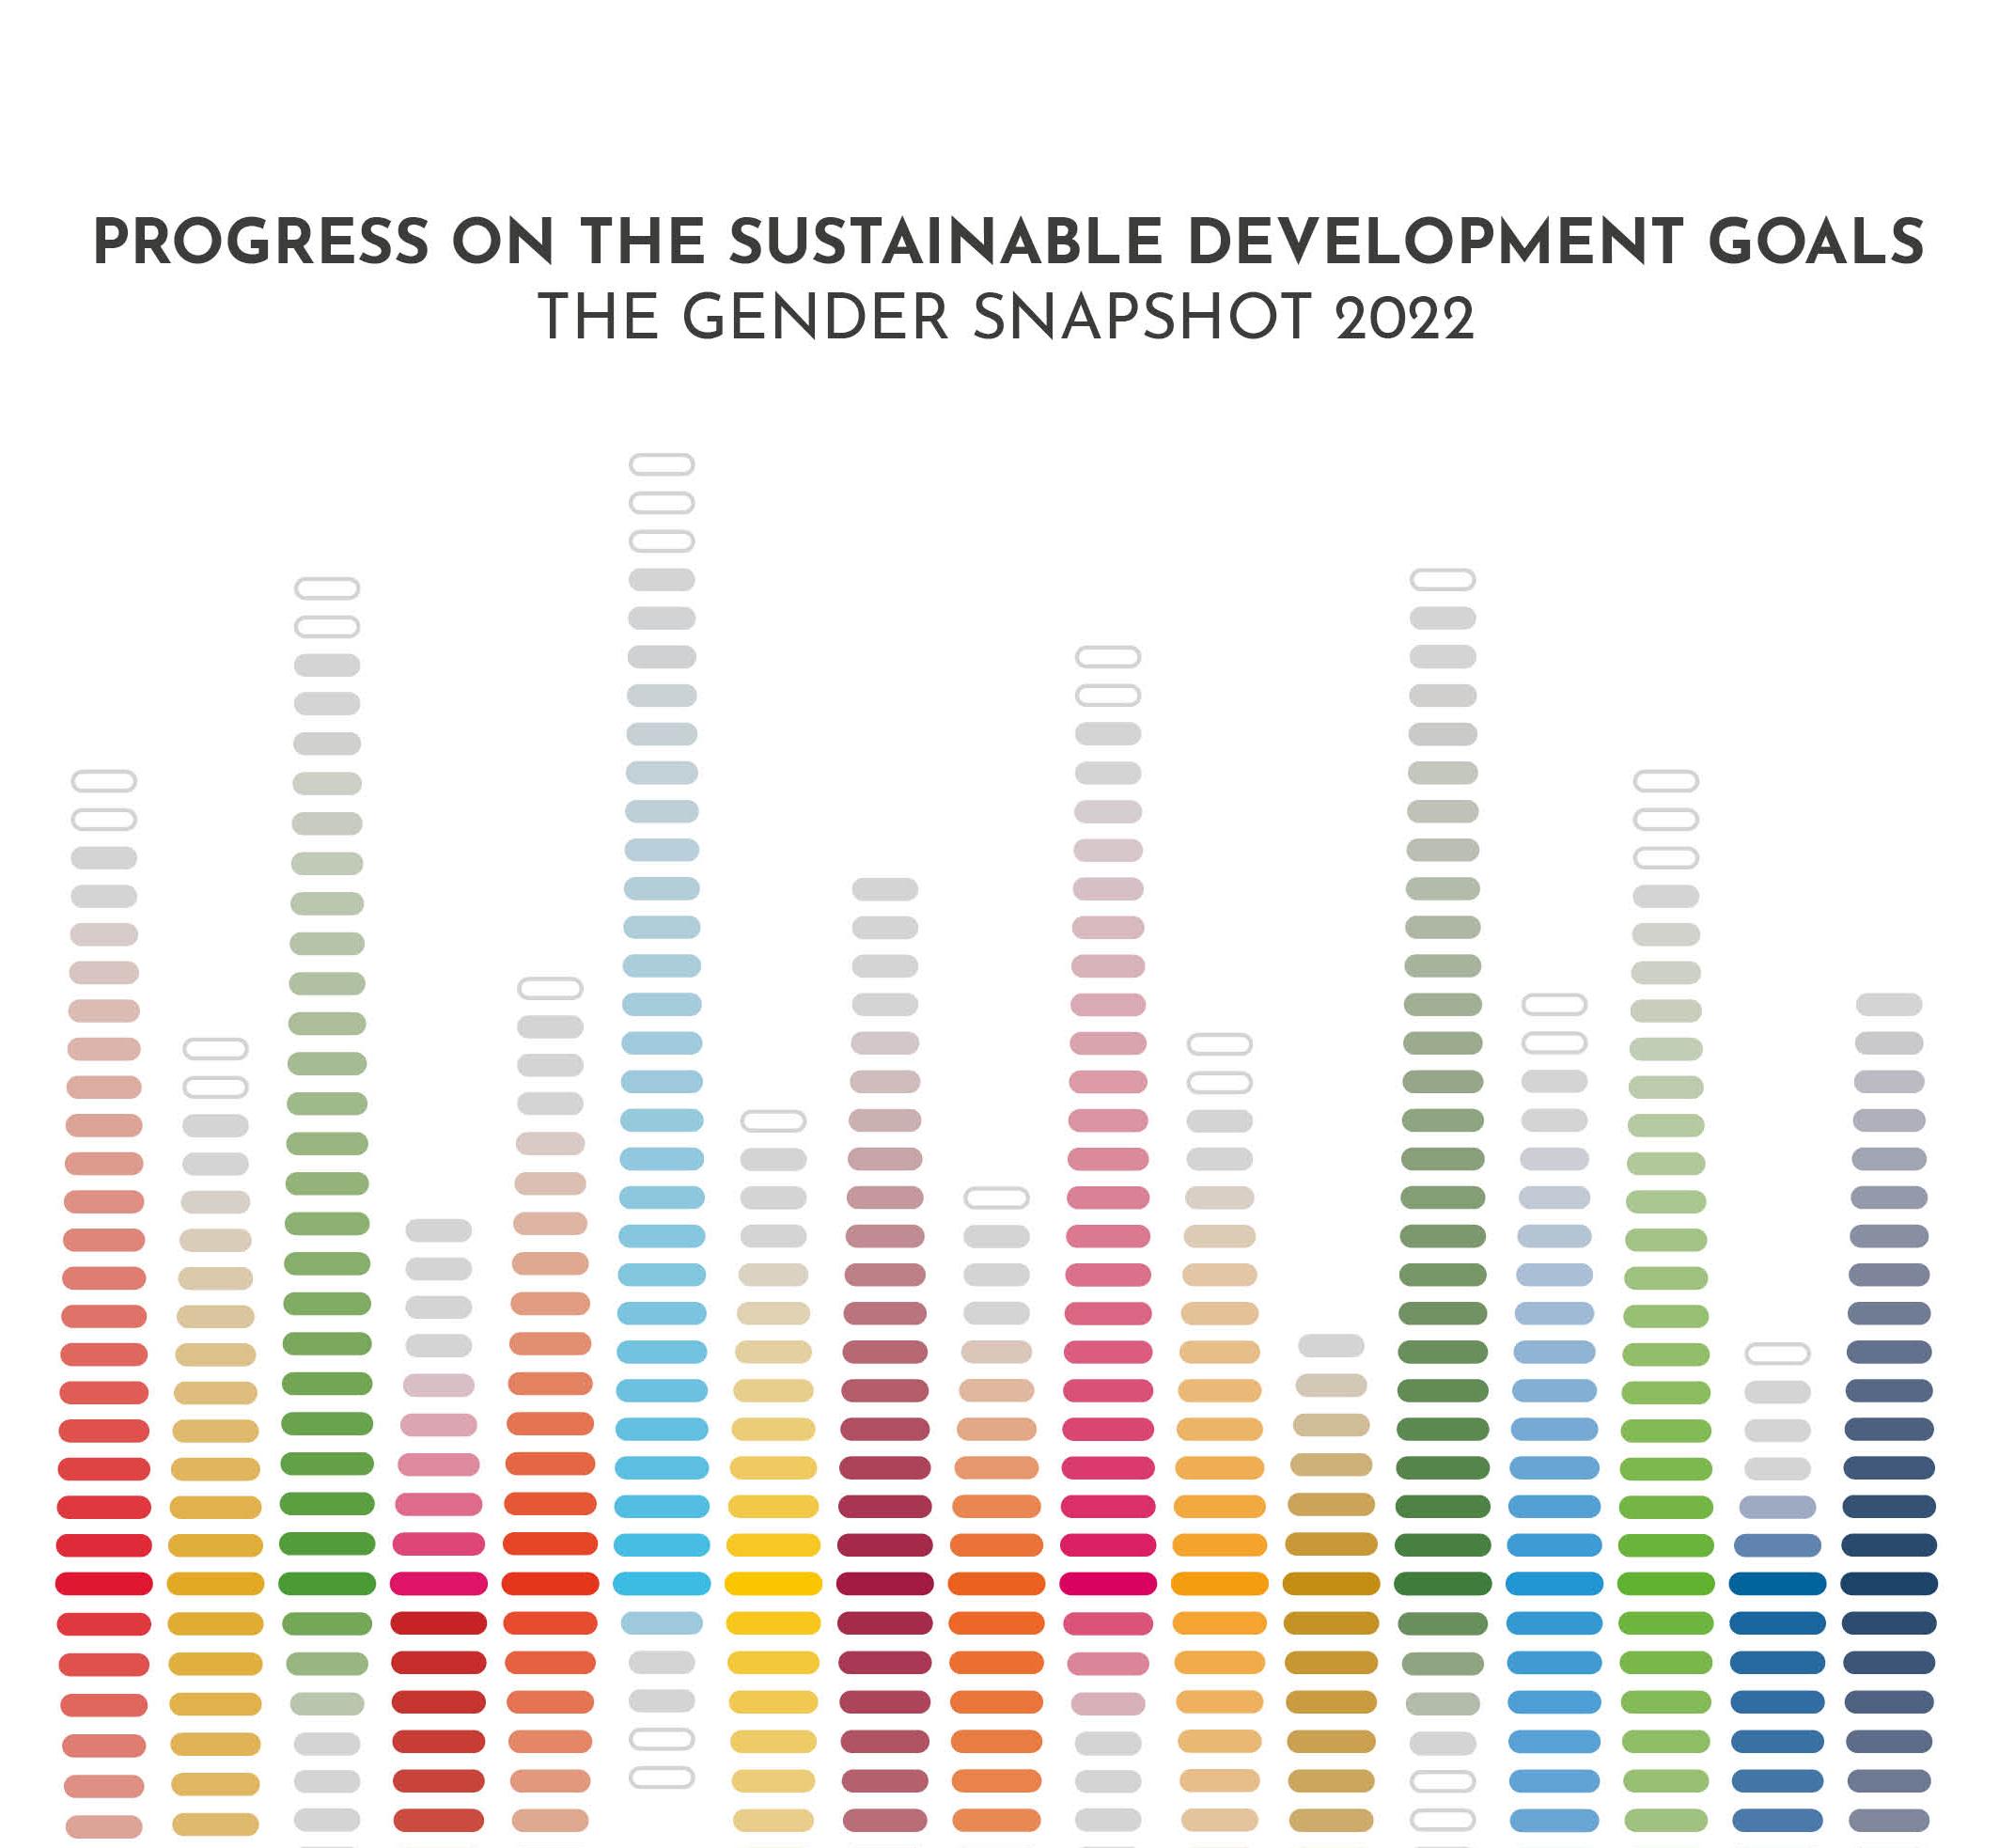 Progress on the Sustainable Development Goals: The gender snapshot 2022